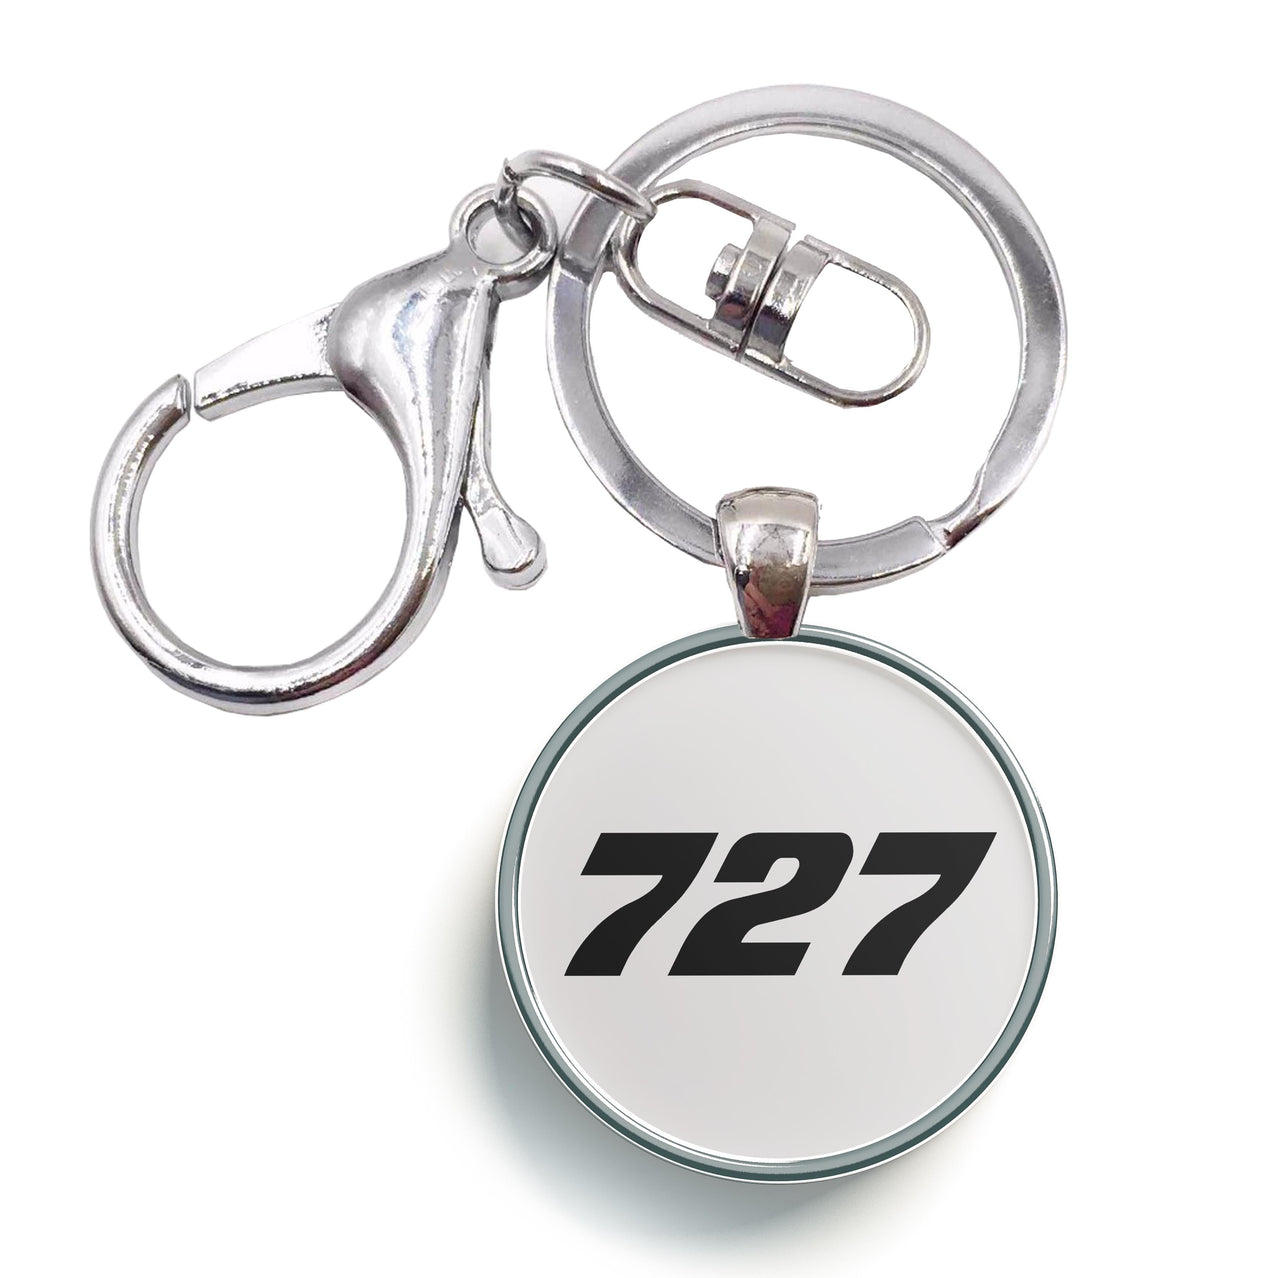 727 Flat Text Designed Circle Key Chains